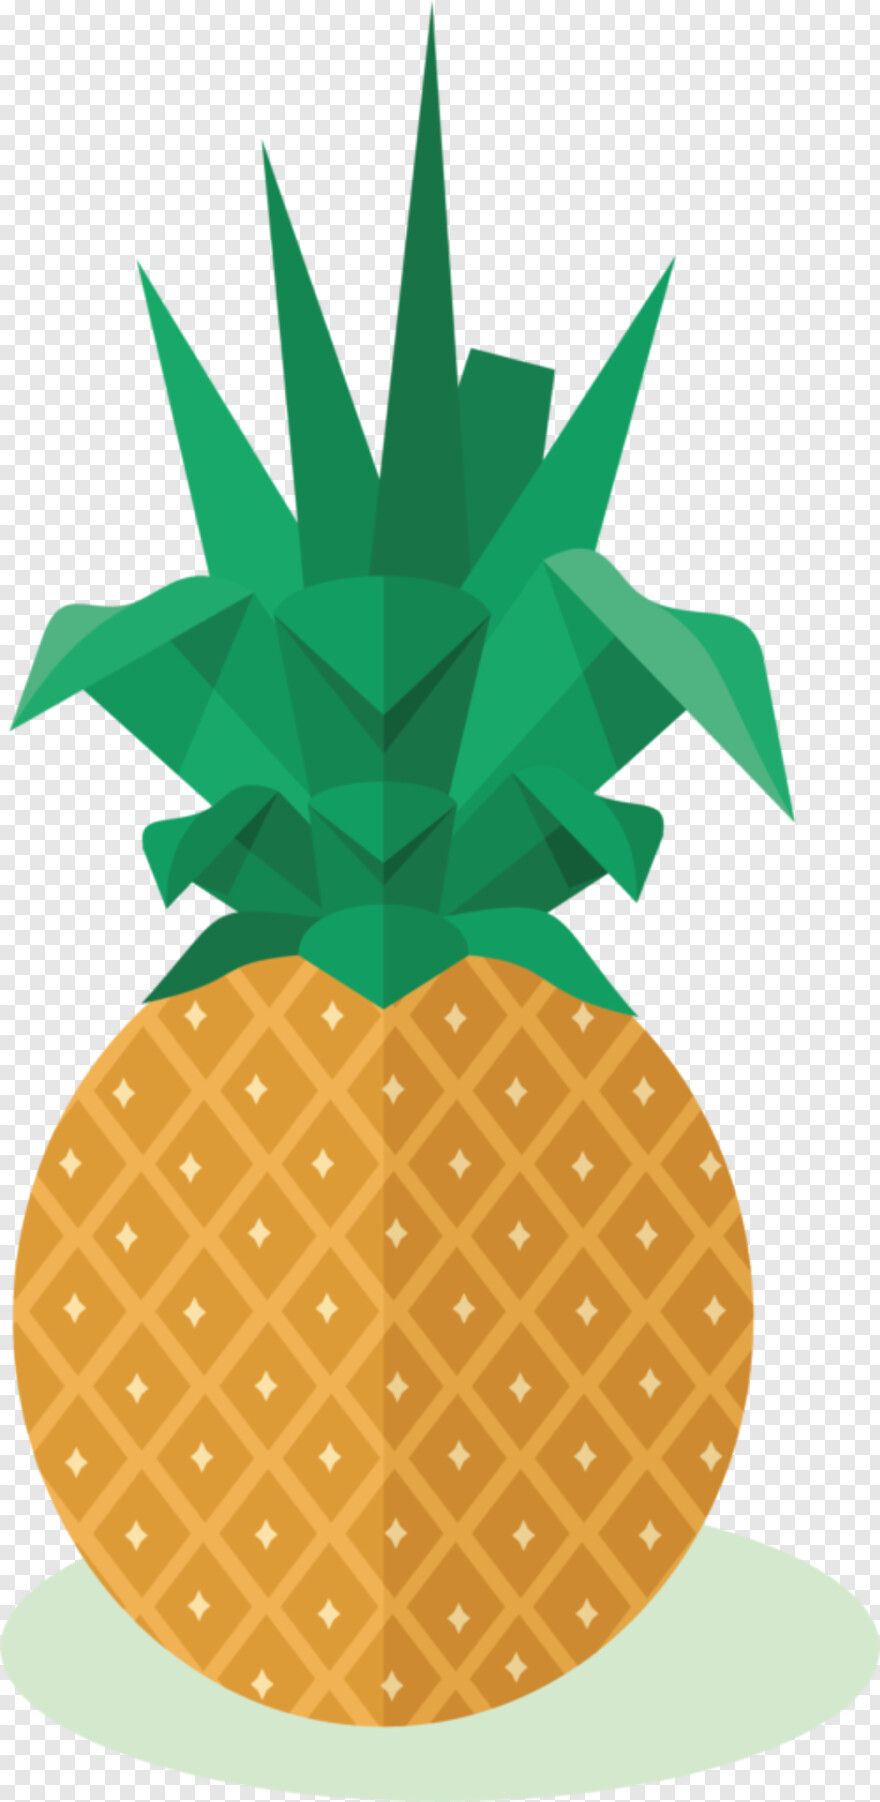  Pineapple, Pineapple Clipart, Pineapple Juice, Fruit, Fruit Salad, Fruit Tree